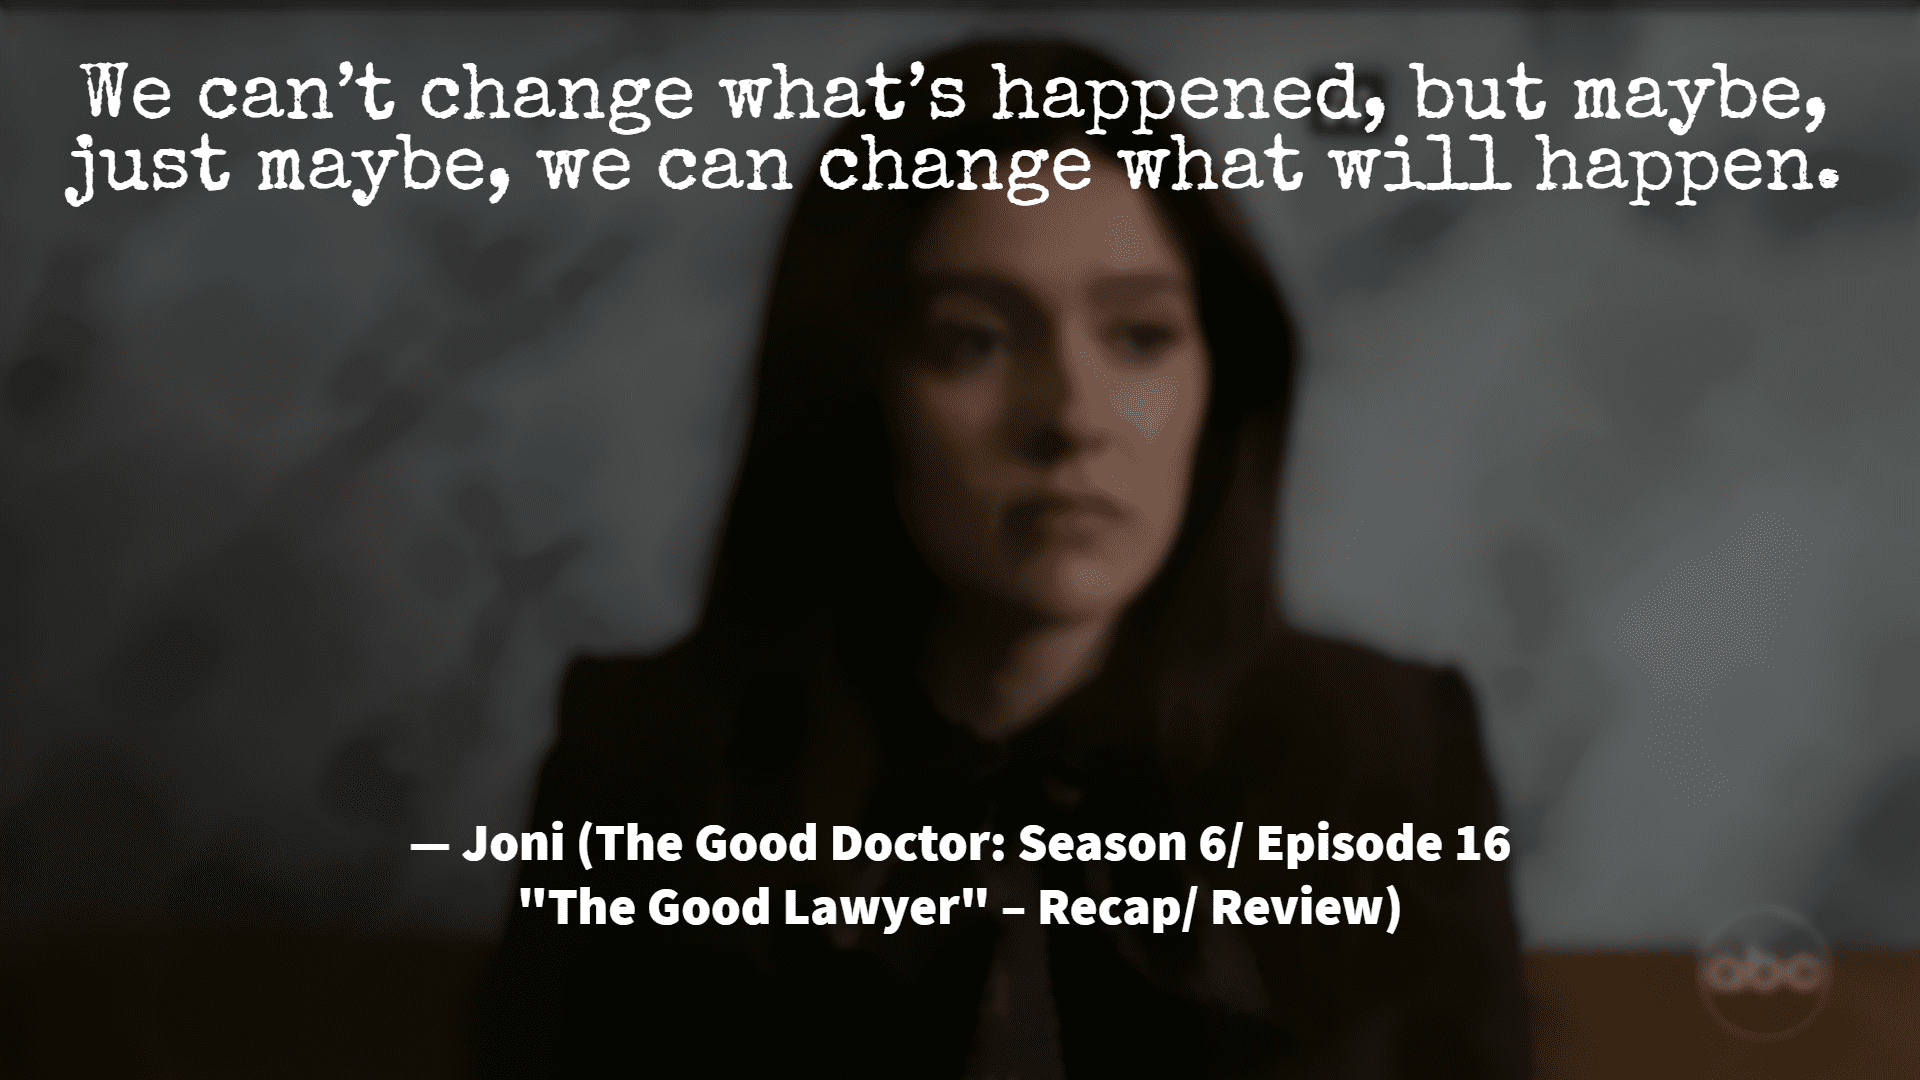 The Good Doctor: Season 6/ Episode 16 “The Good Lawyer” – Recap/ Review